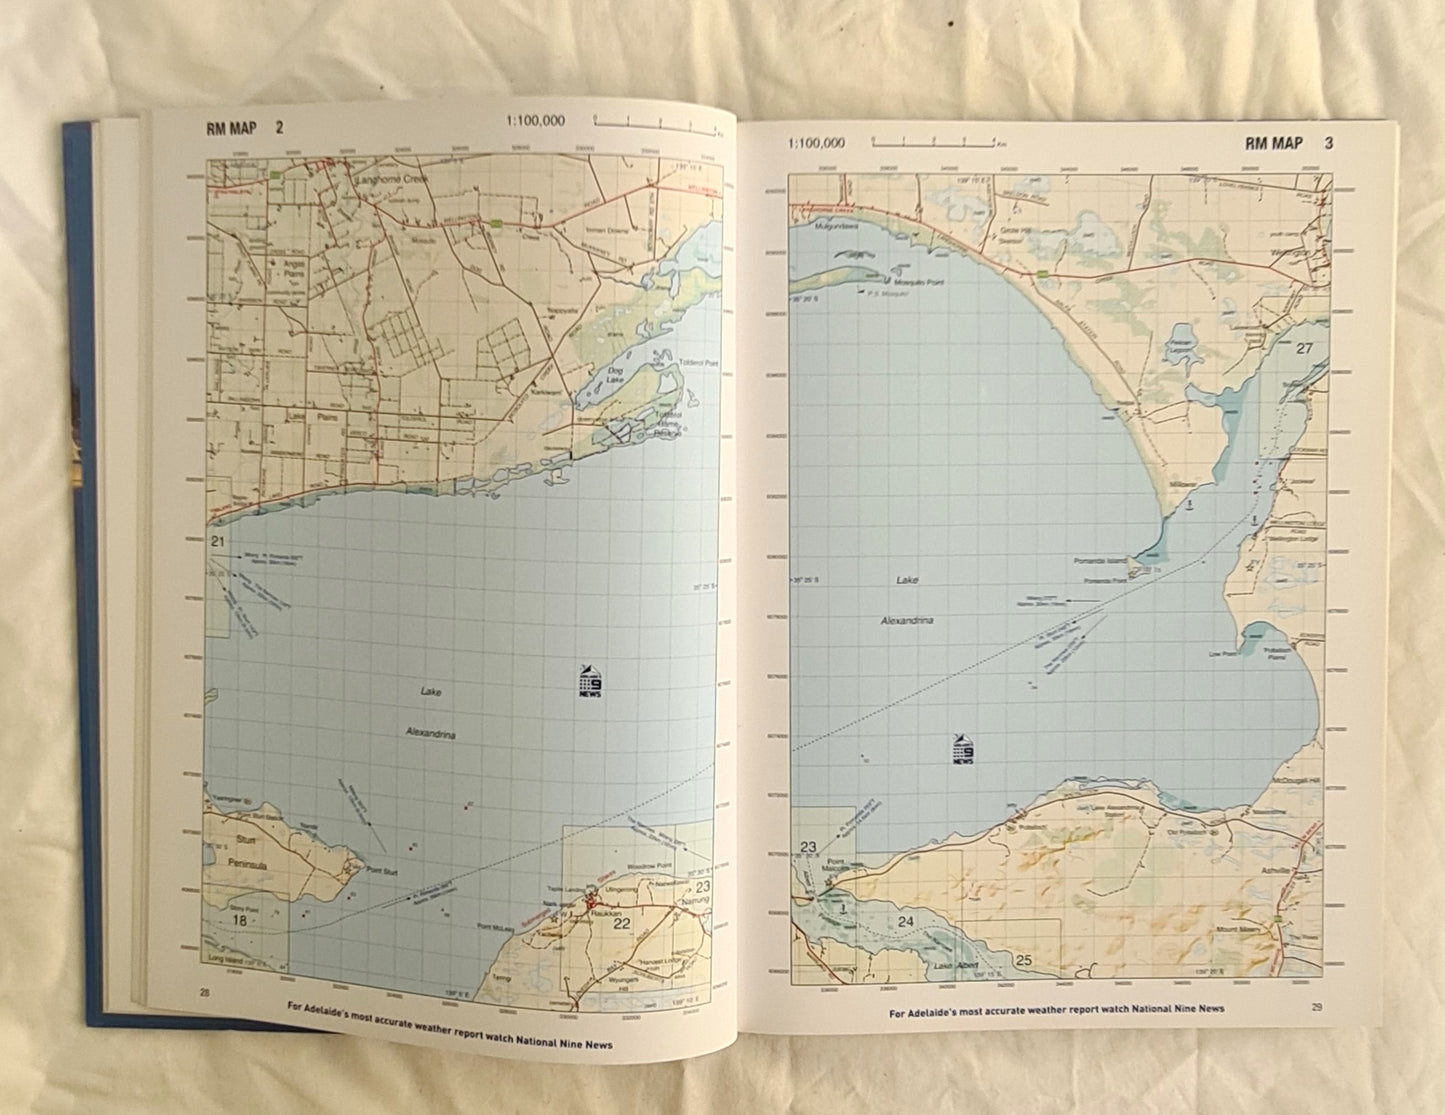 South Australia’s Waters An Atlas & Guide